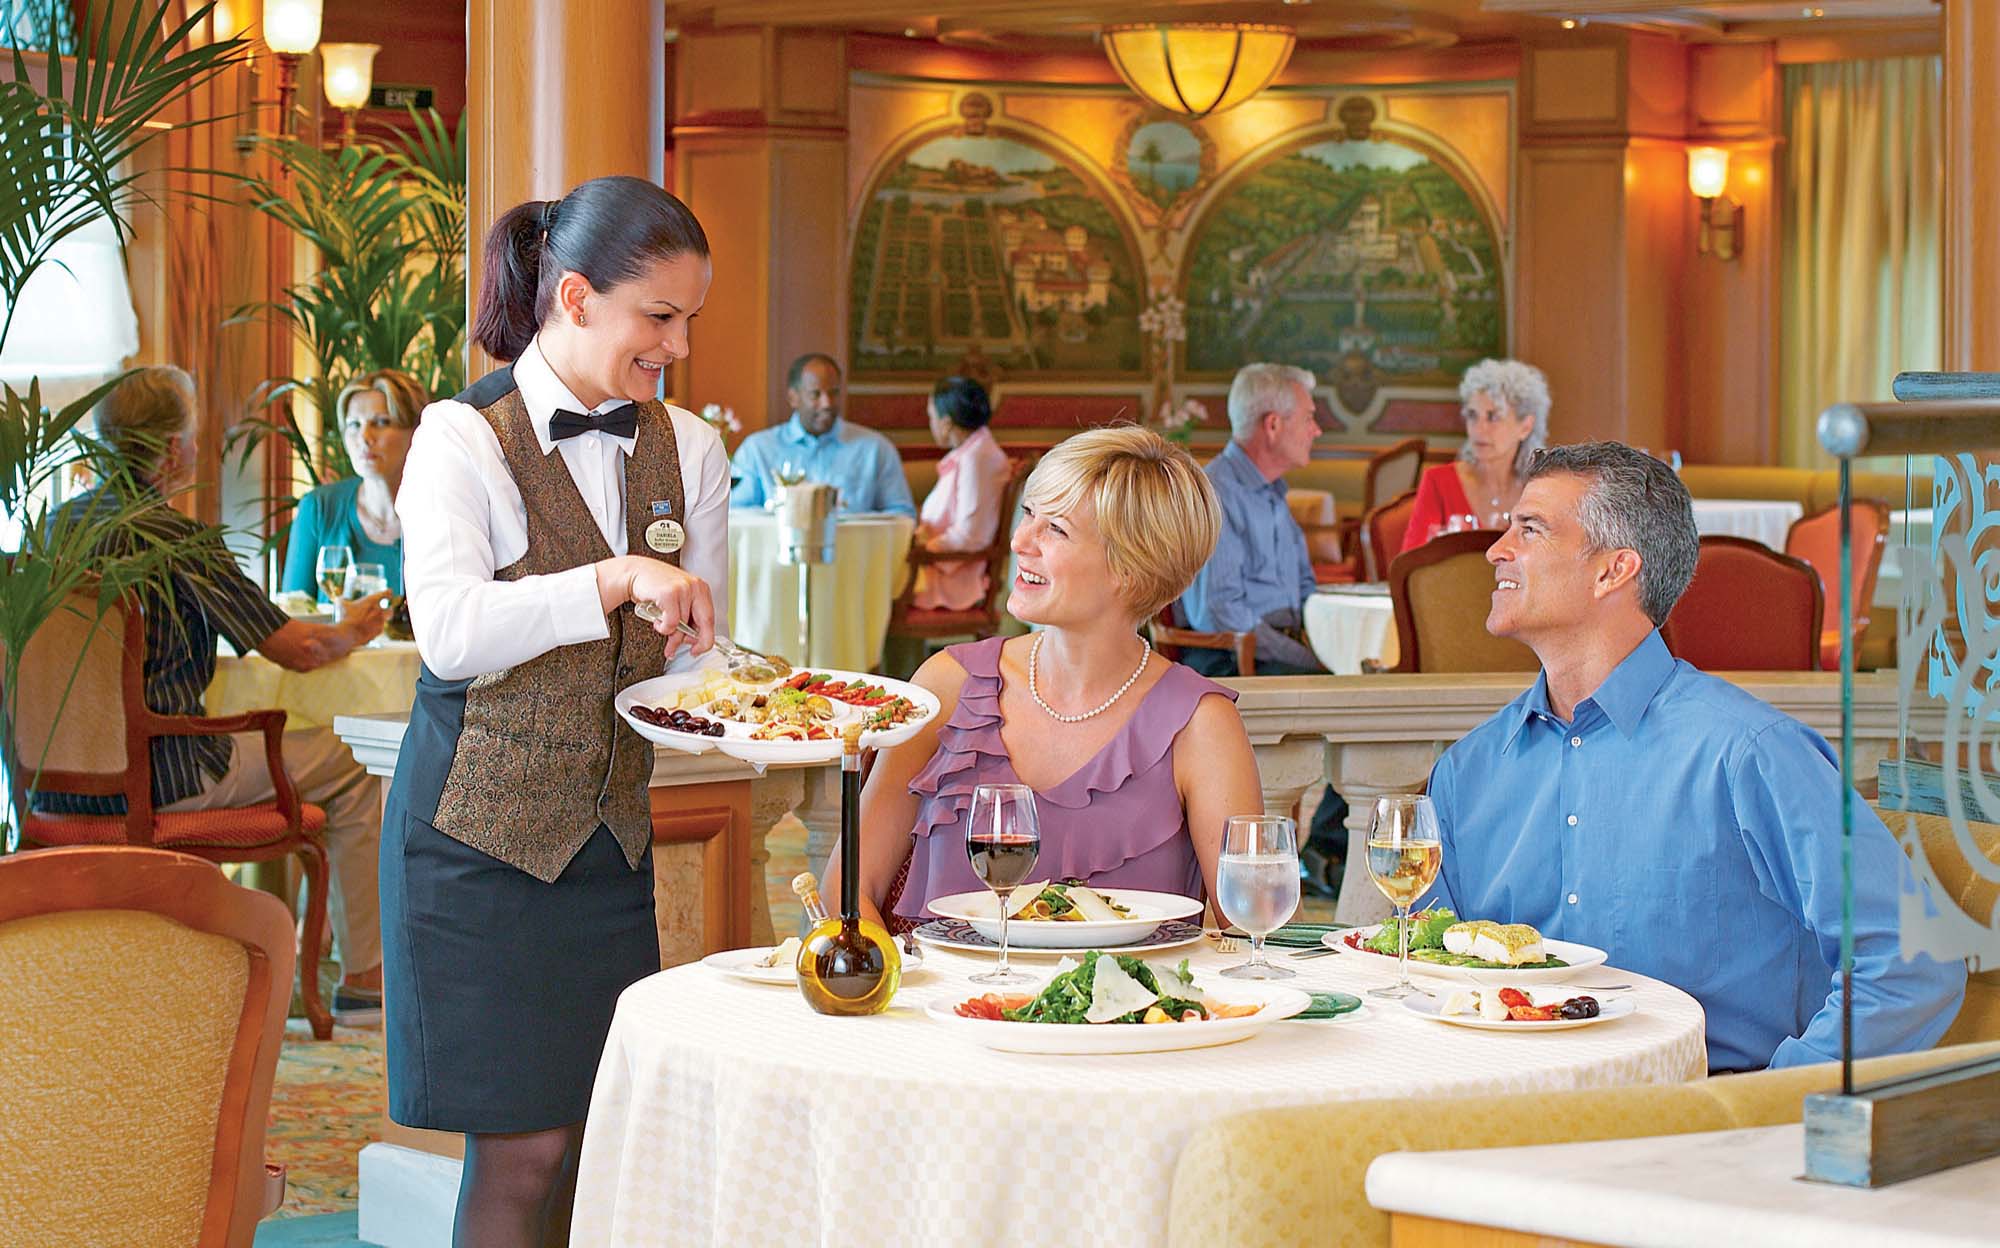 Enjoy Mediterranean fare and attentive service at Sabitini's Italian Restaurant aboard your Princess ship.